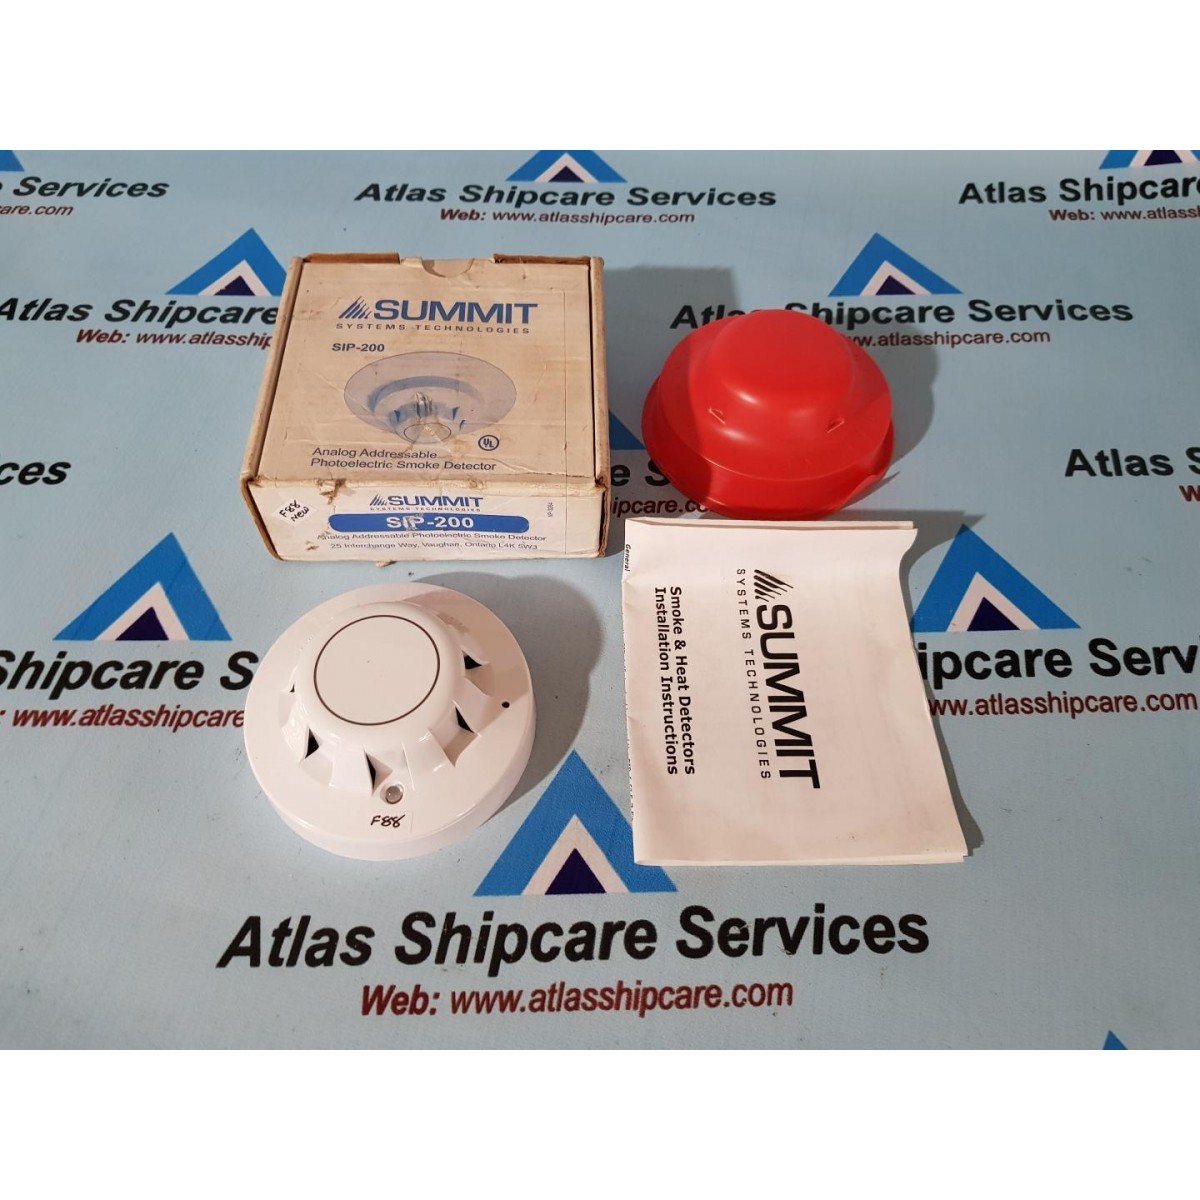 Summit Sip 200 Analog Addressable Photoelectric Smoke Detector Atlas Shipcare Services 9685